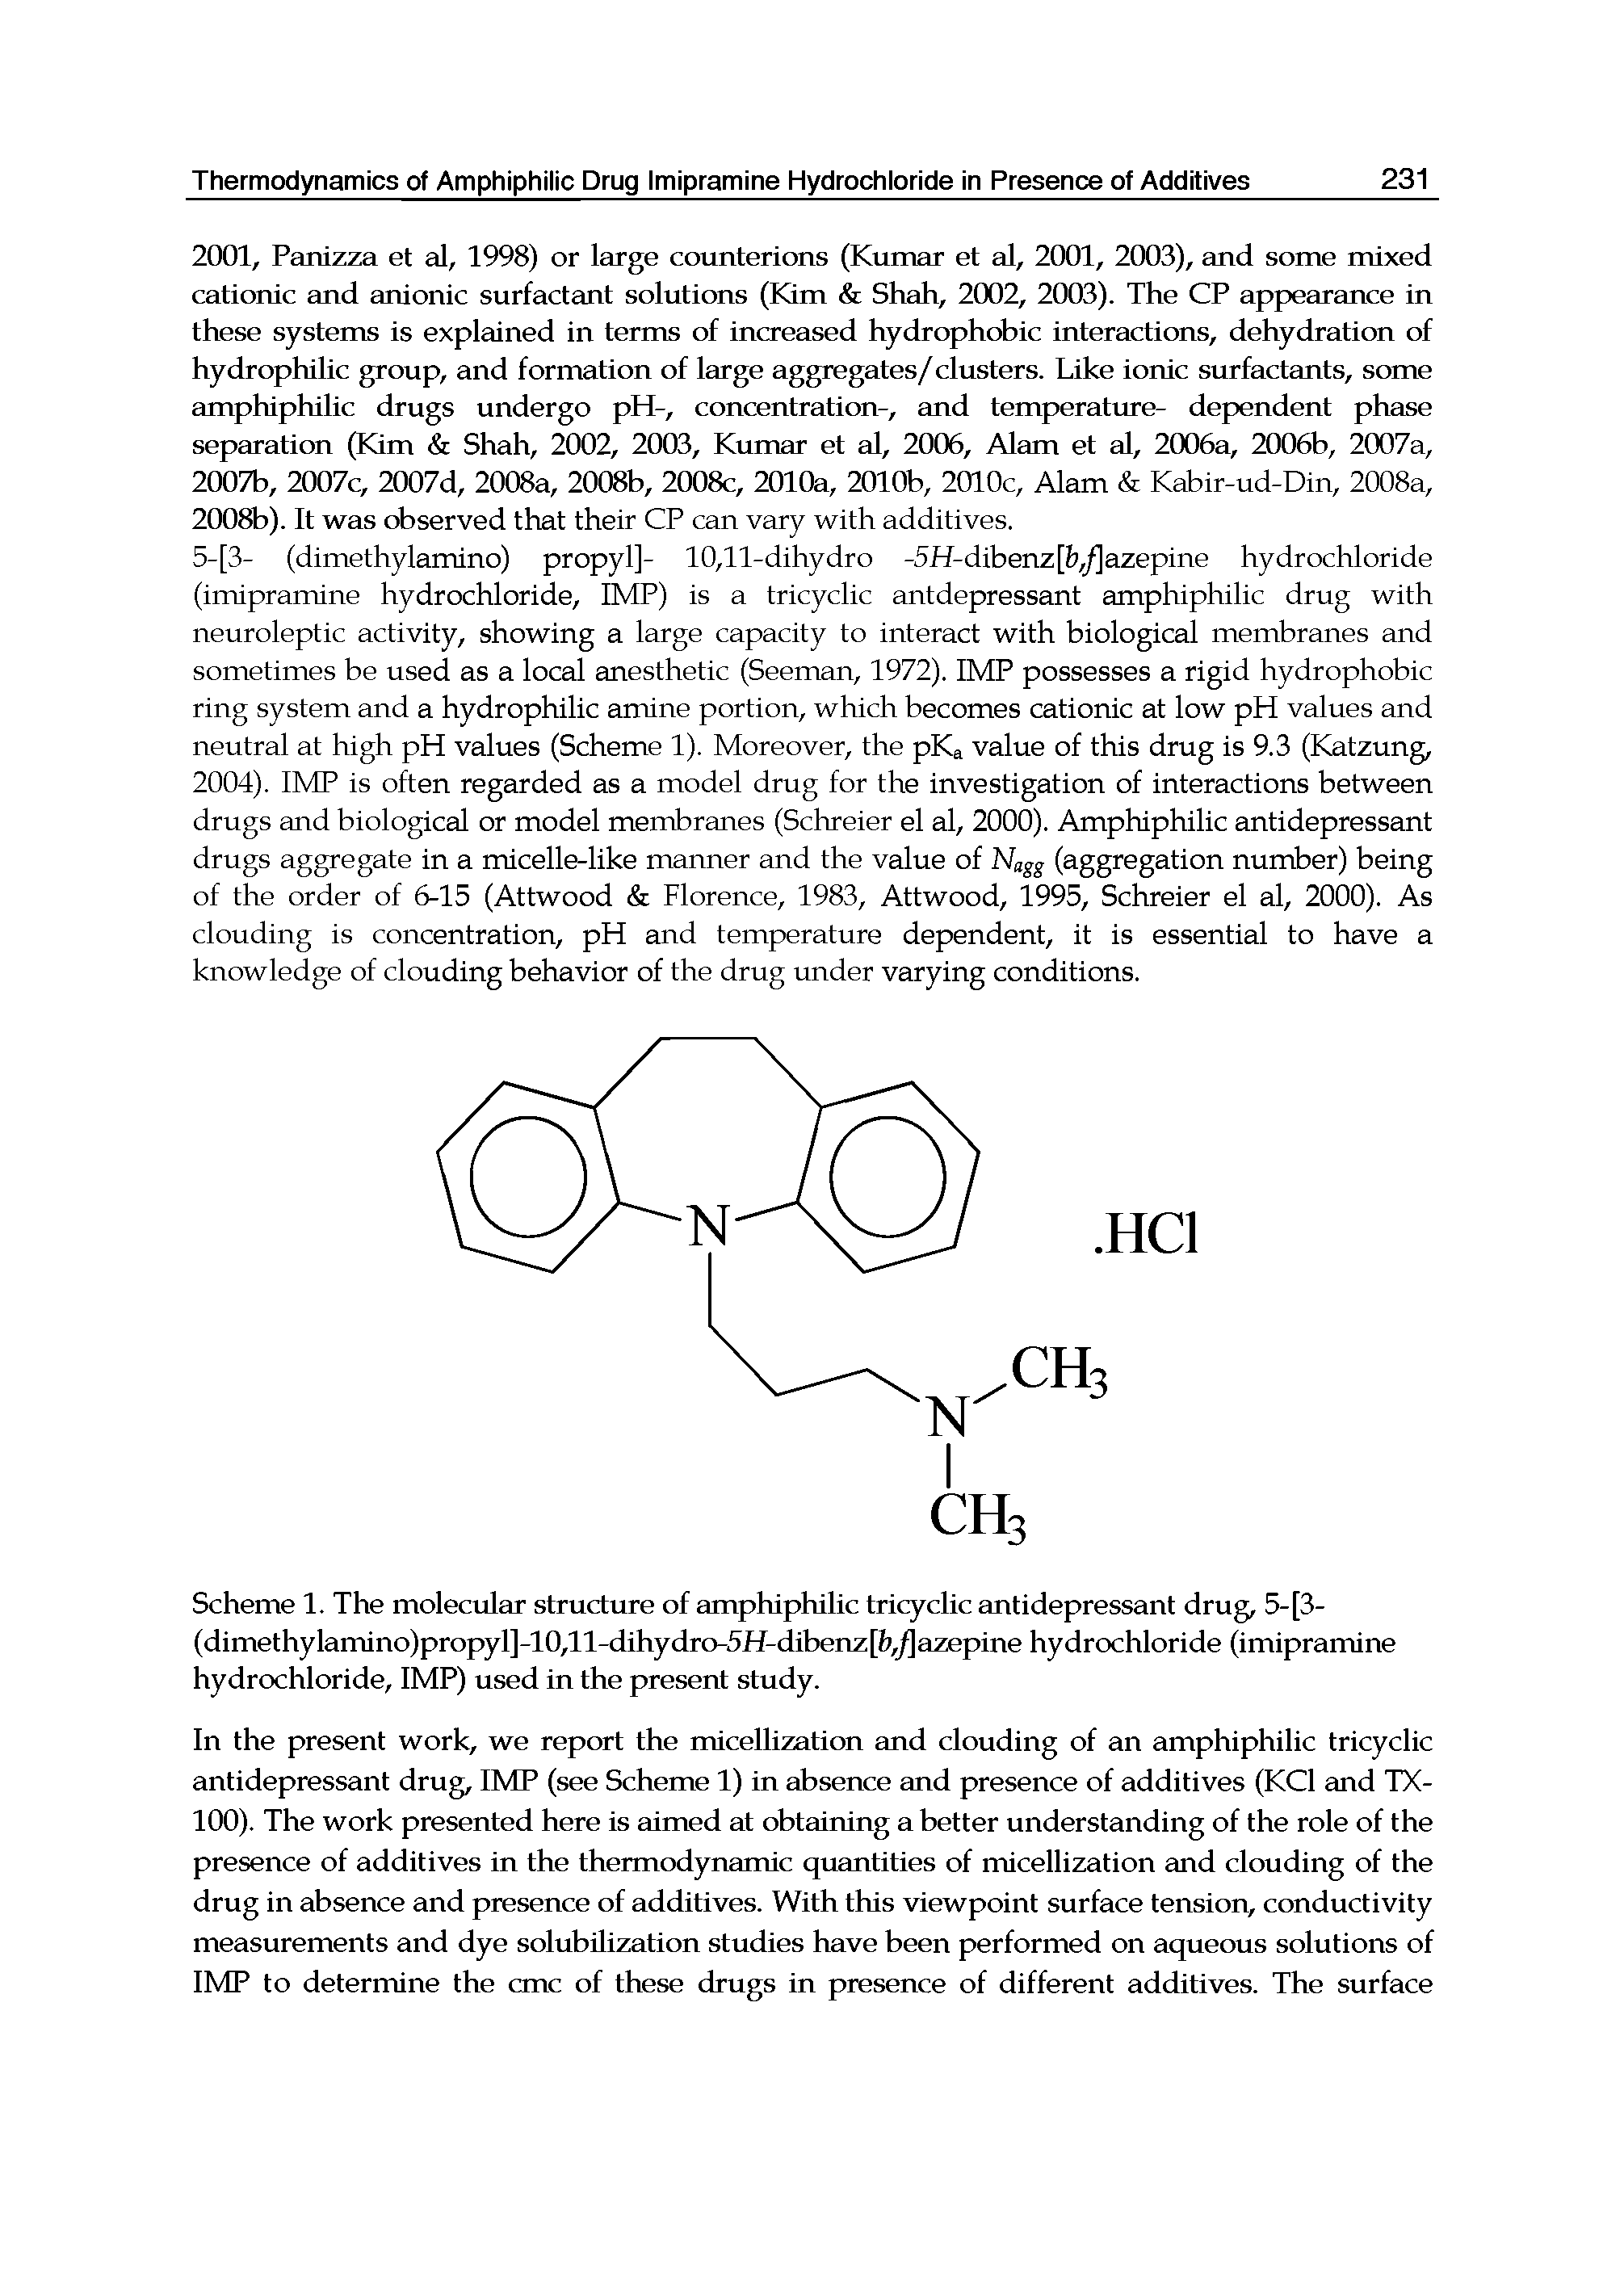 Scheme 1. The molecular structure of amphiphilic tricyclic antidepressant drug, 5-[3-(dimethylamino)propyl]-10,ll-dihydro-5H-dibenz[, / azepine hydrochloride (imipramine hydrochloride, IMP) used in the present study.